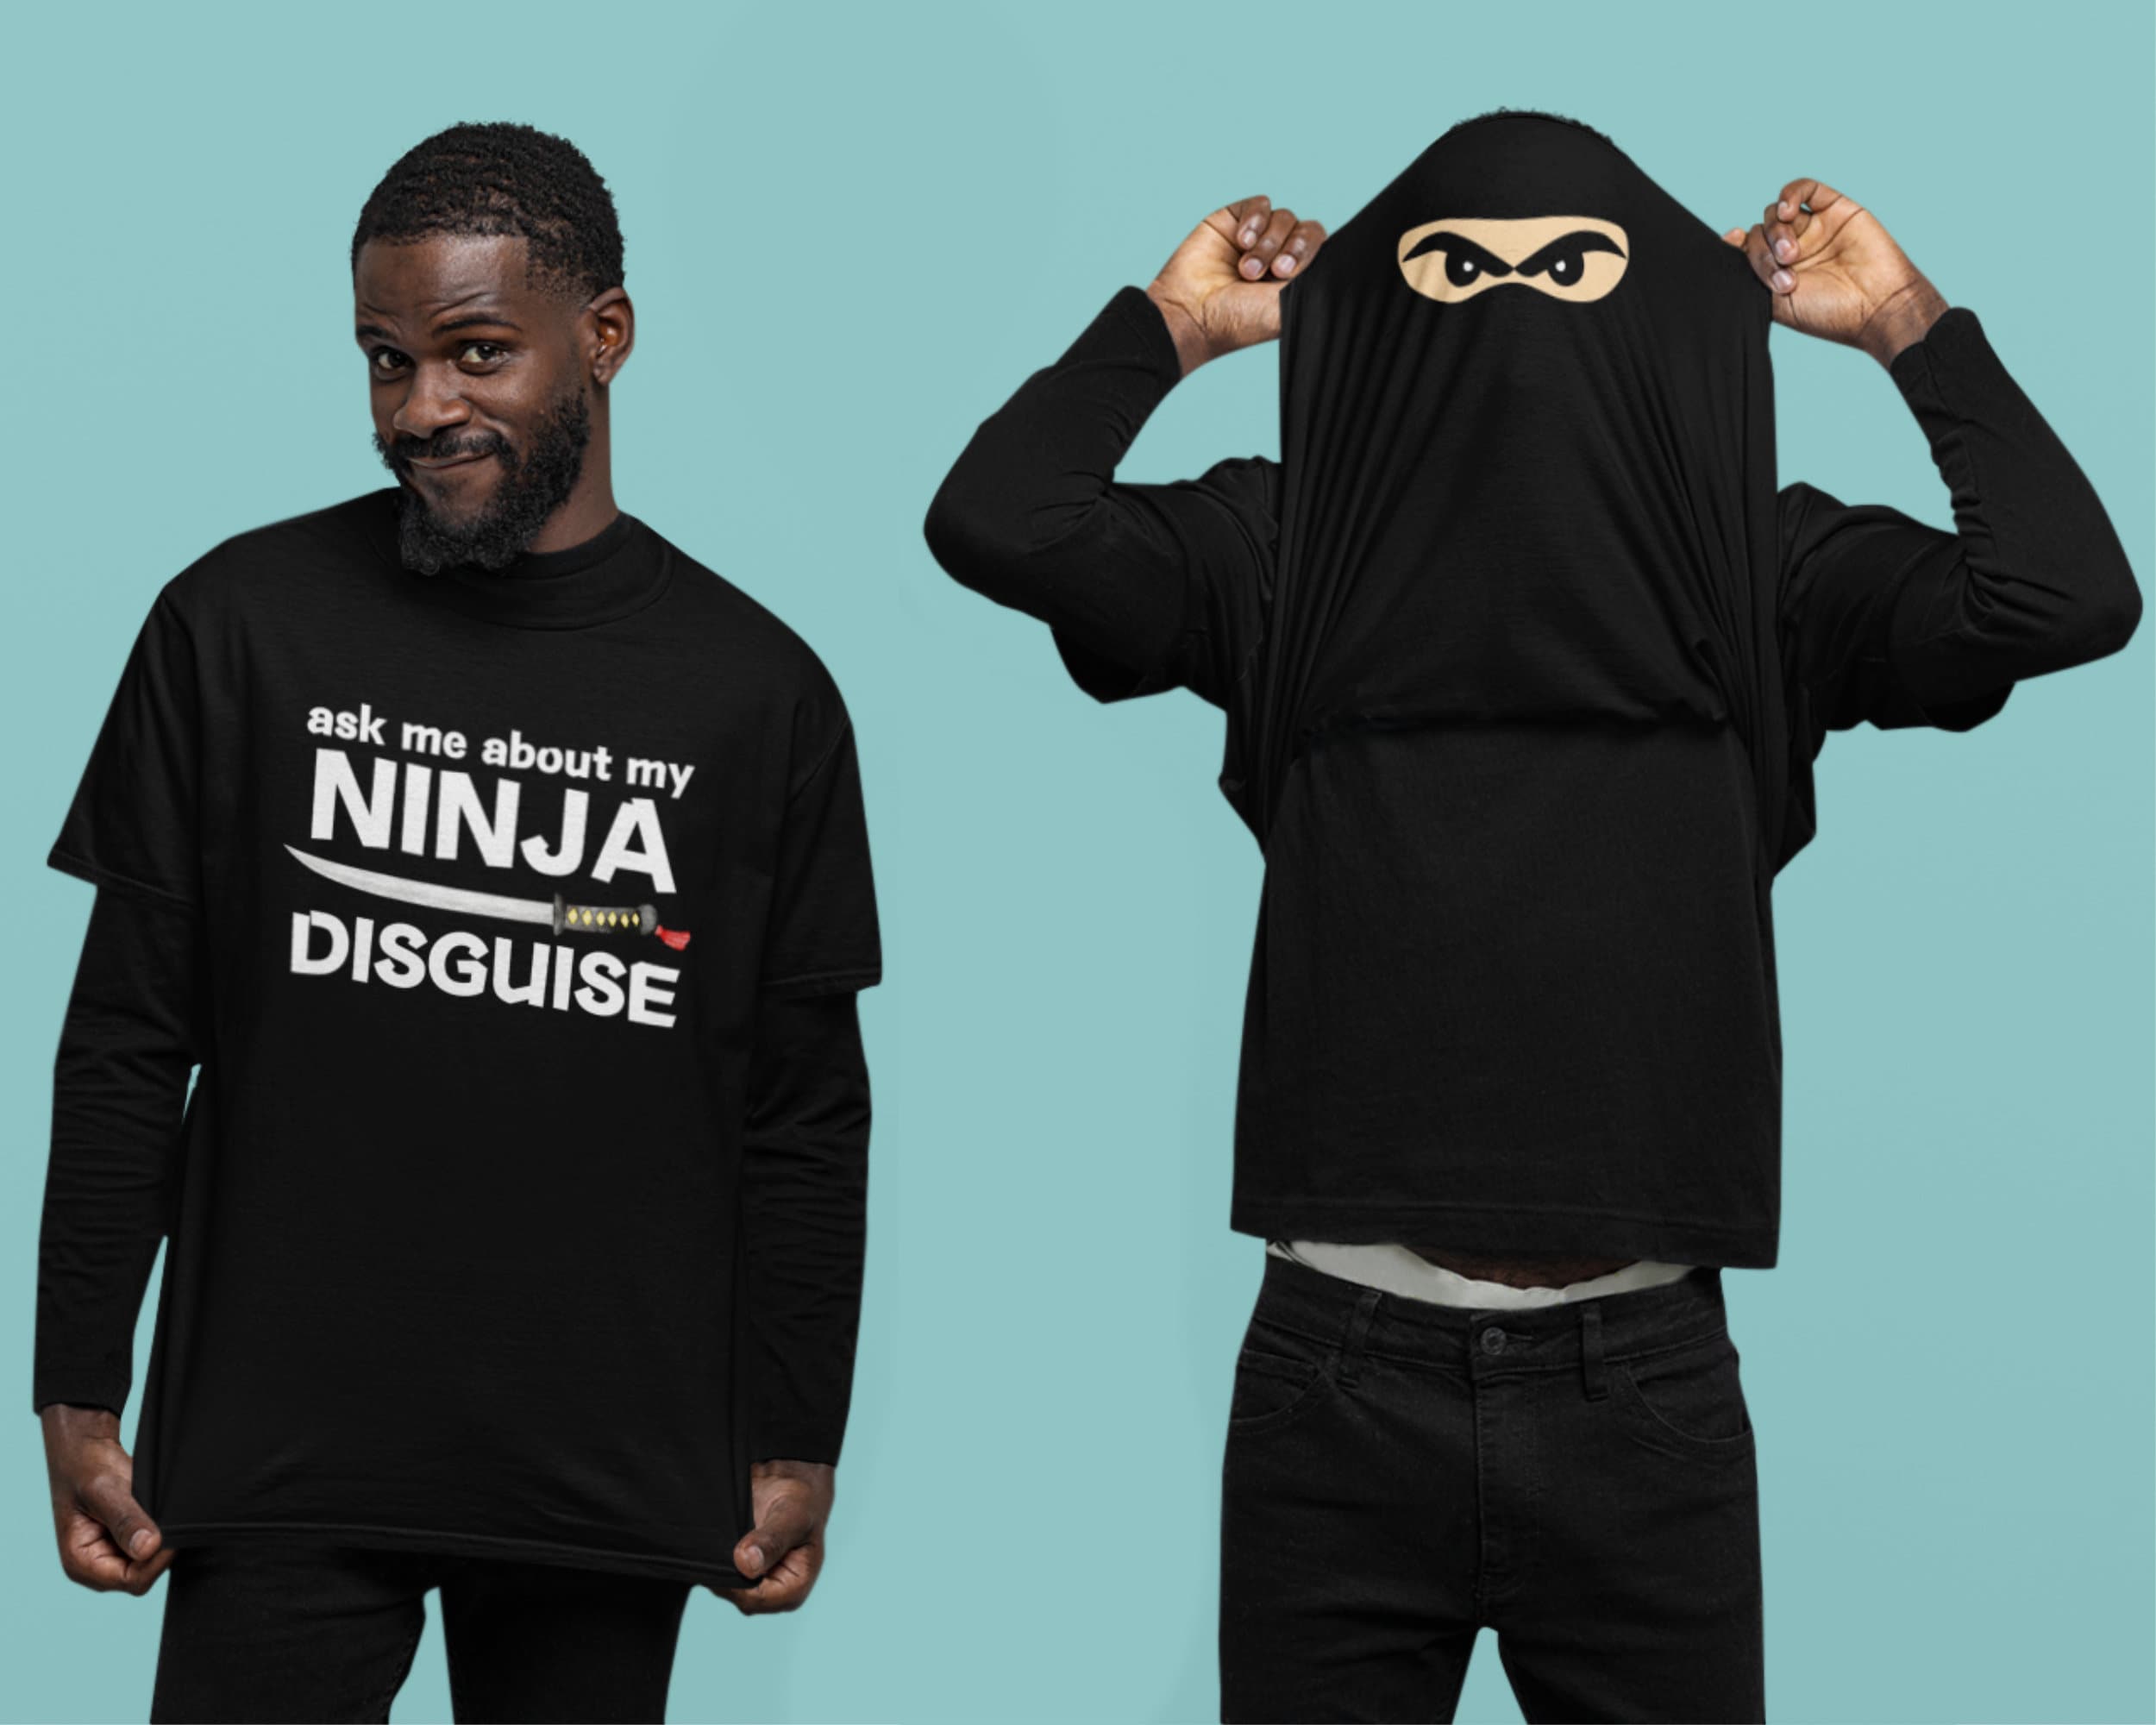 T-shirt Ask Ninja Disguise, Ask Ninja Disguise Shirt